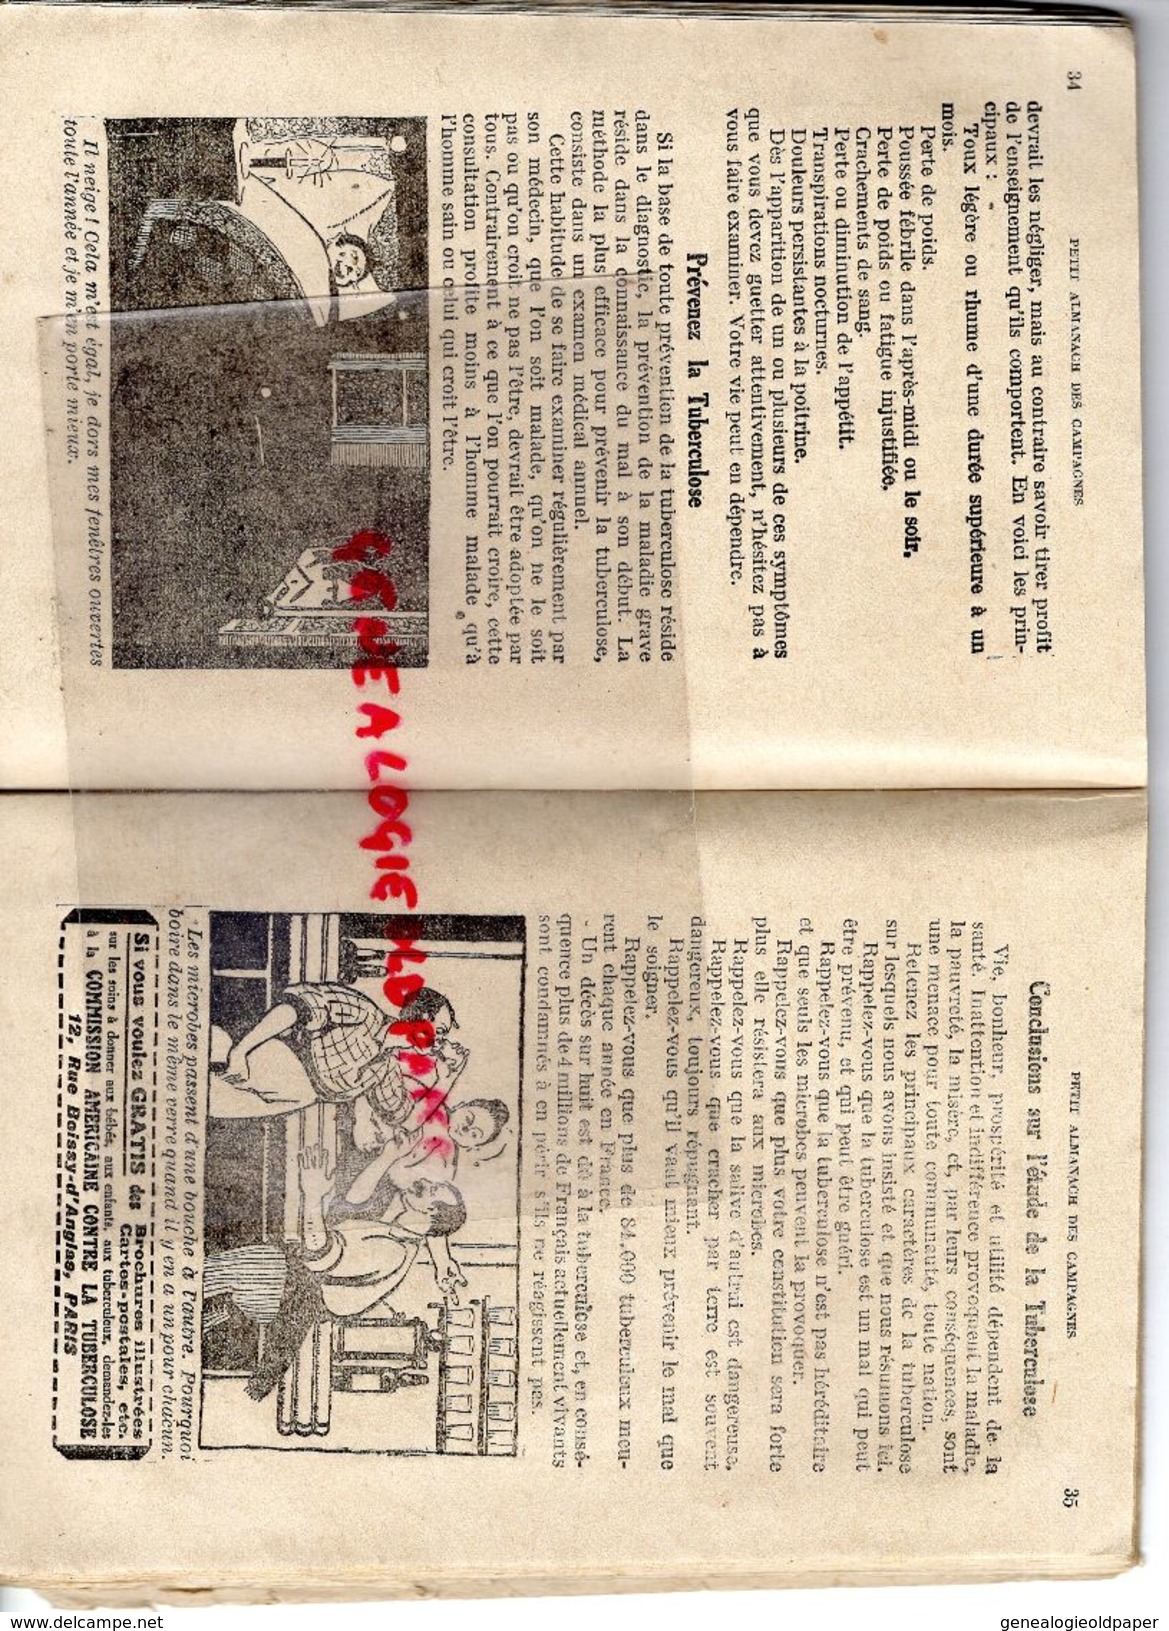 87-19-23-24-16-86-36-RARE PETIT ALMANACH CAMPAGNES DU CENTRE-IMPRIMERIE PERRETTE LIMOGES-FOIRES 1920-TUBERCULOSE-LEGROS